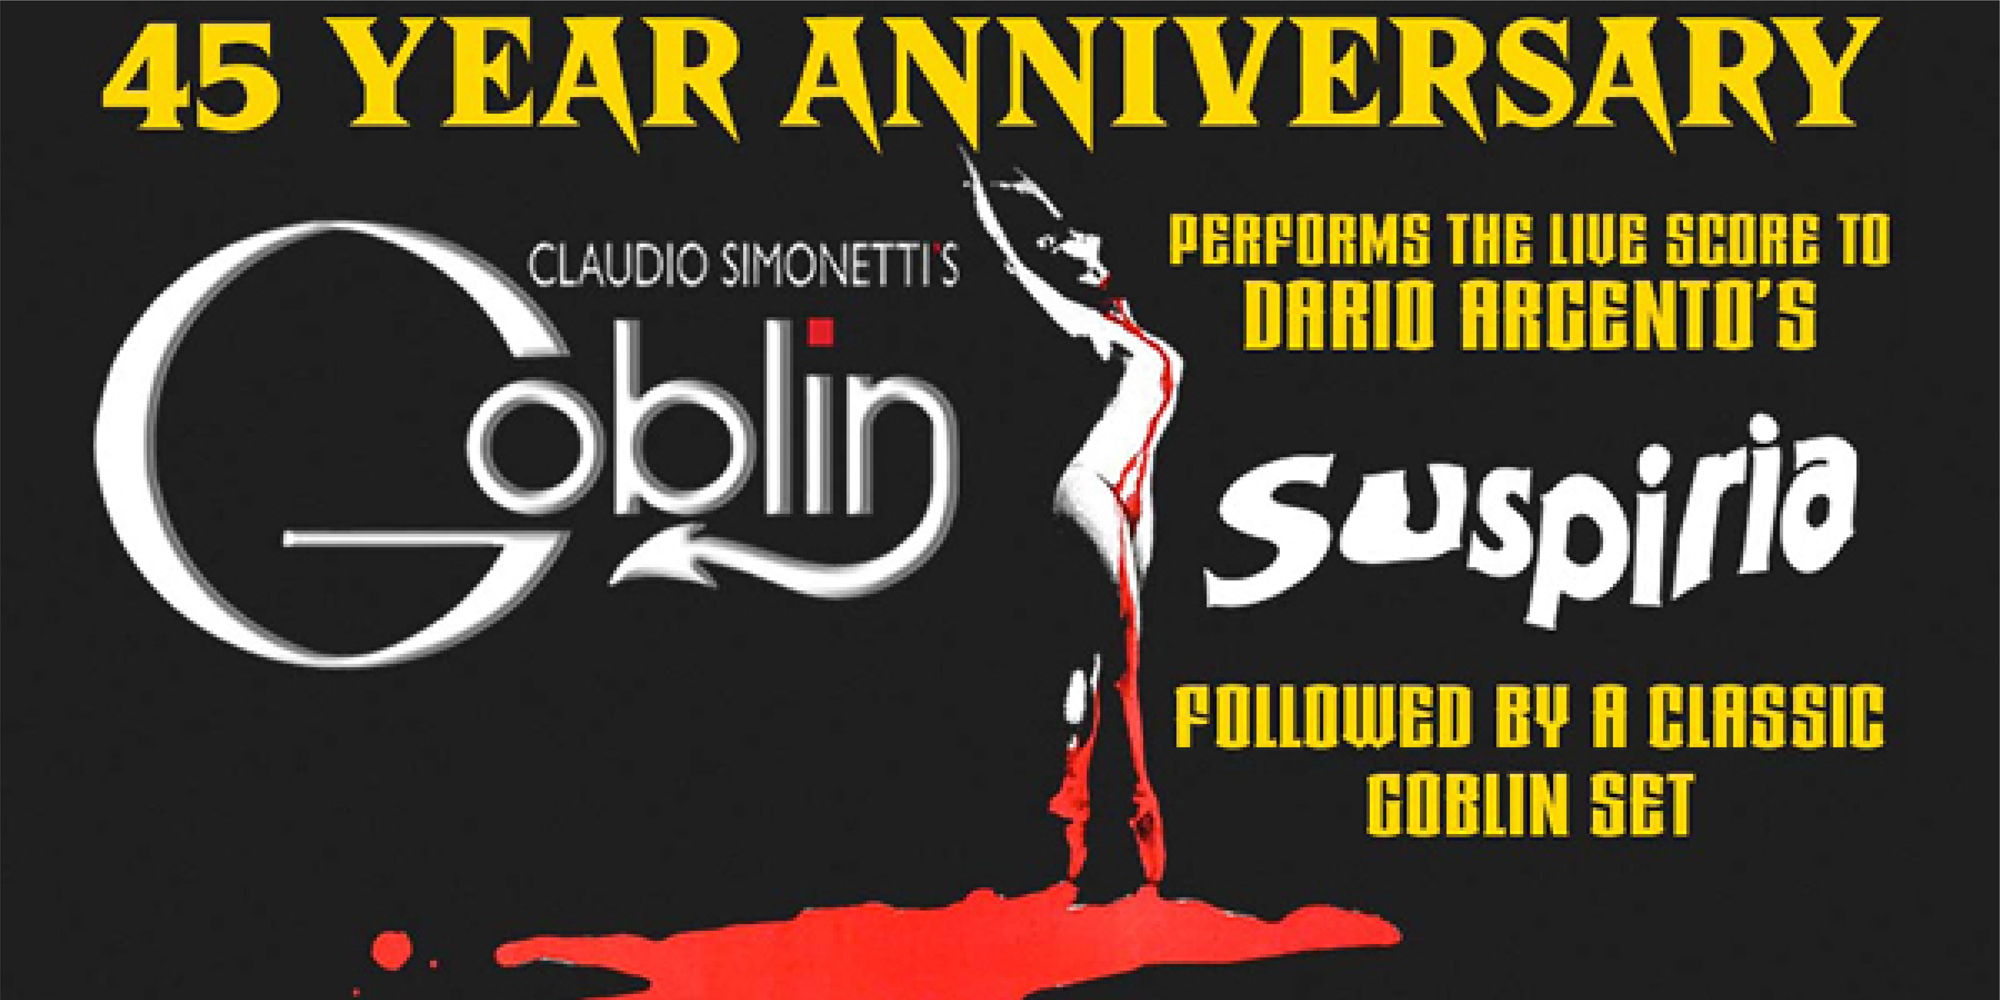  The Paramount Theatre & Resound Presents: Claudio Simonetti's Goblin on 11/22! promotional image